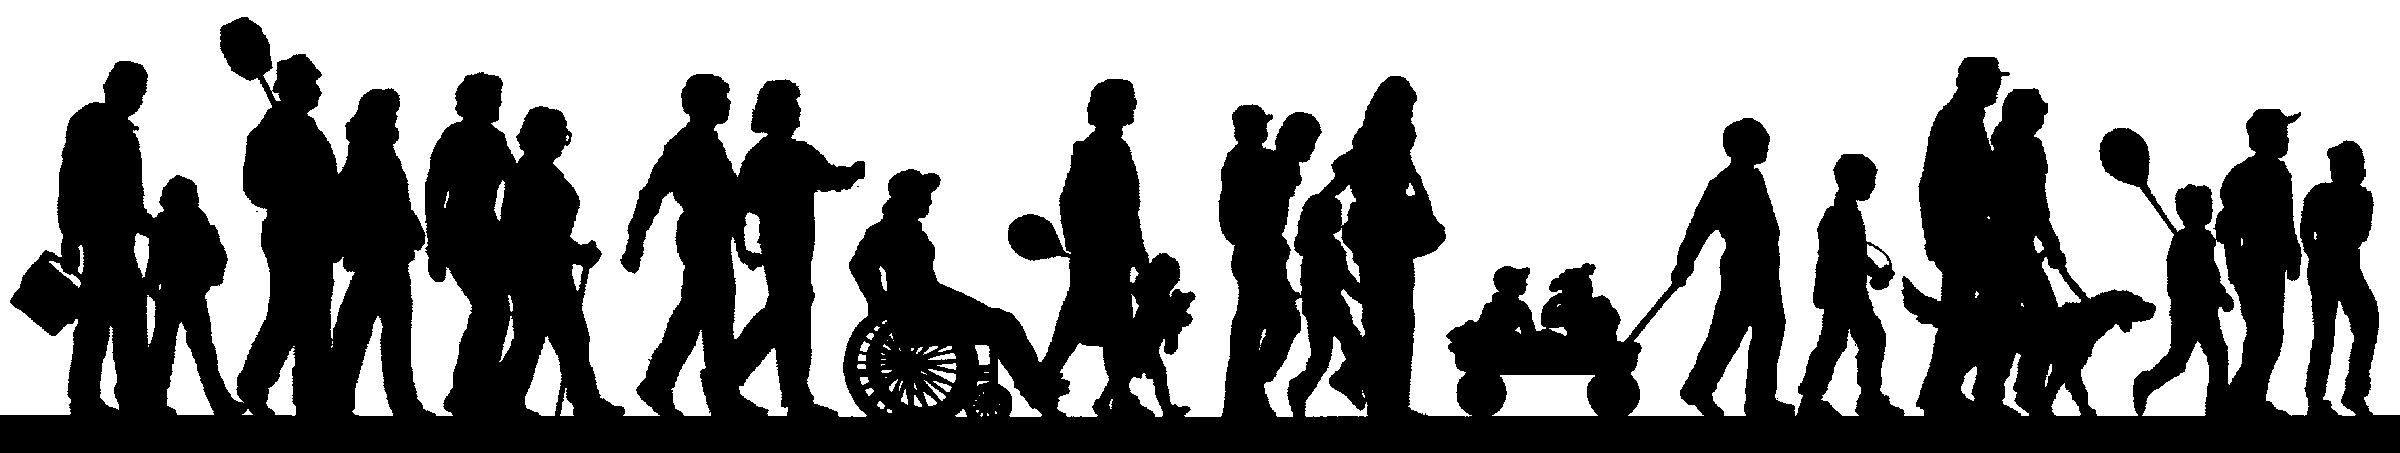 family walking clipart - photo #45